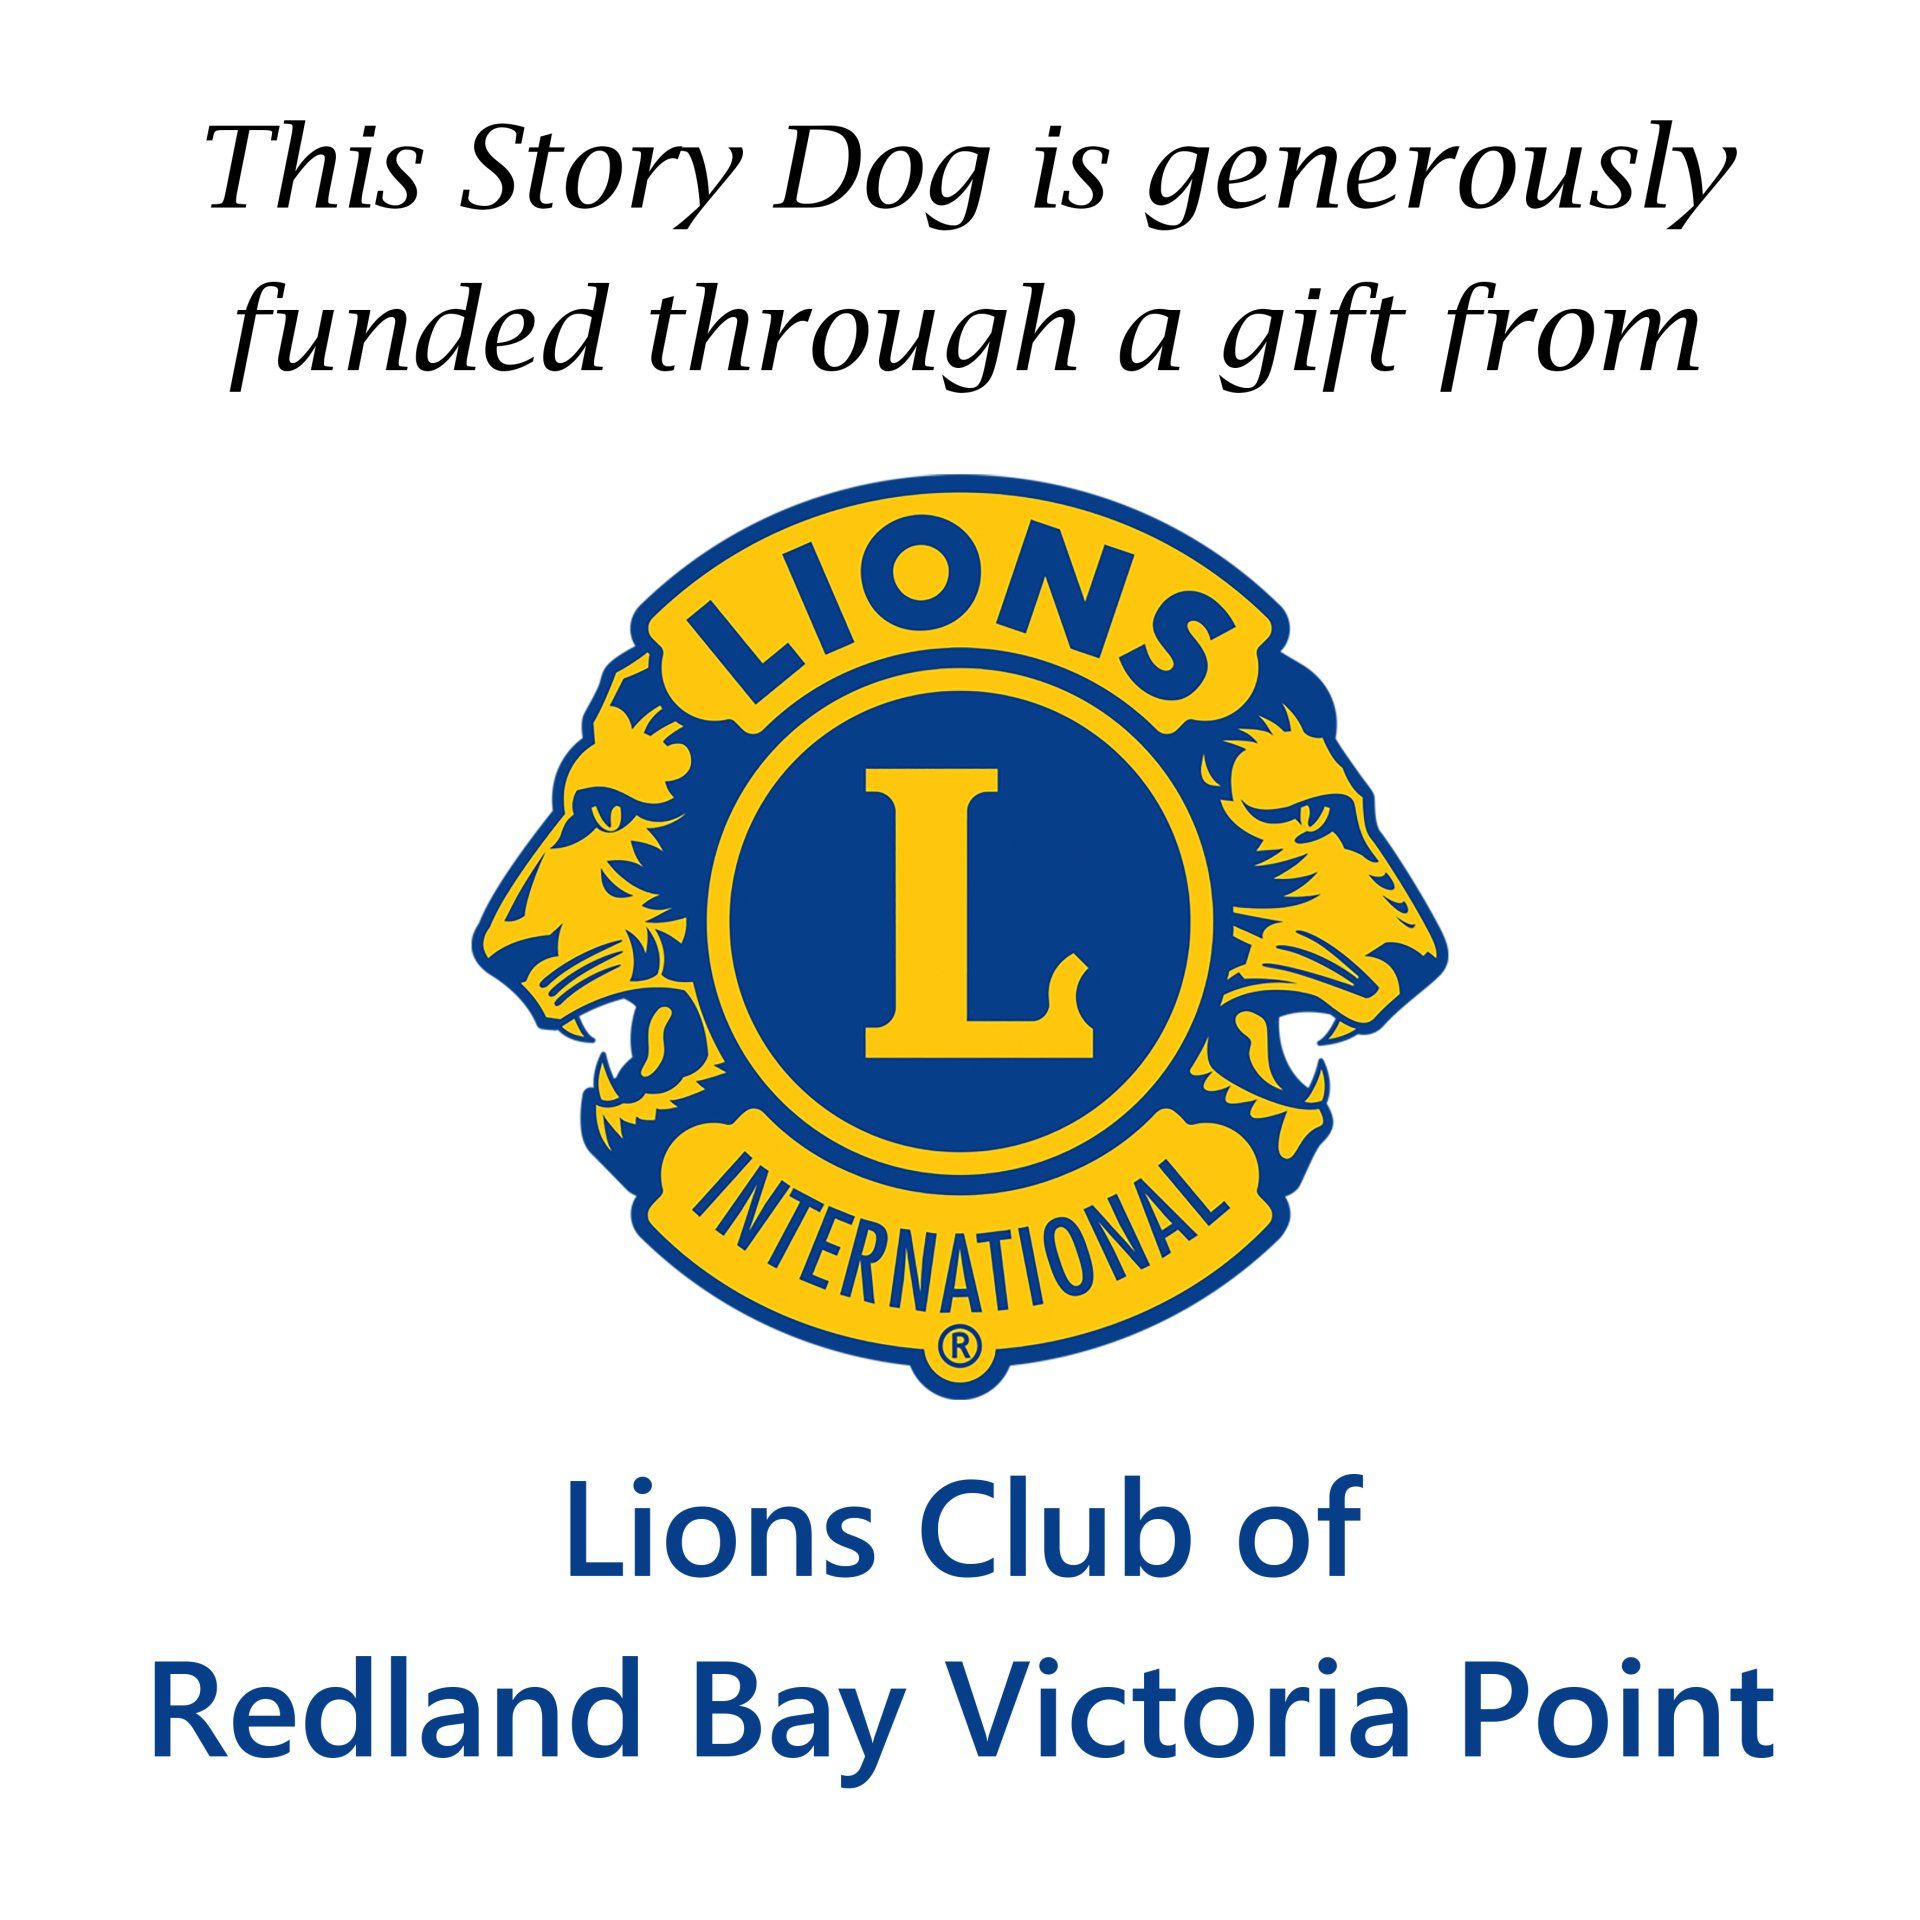 Lions Club of Redland Bay Victoria Point